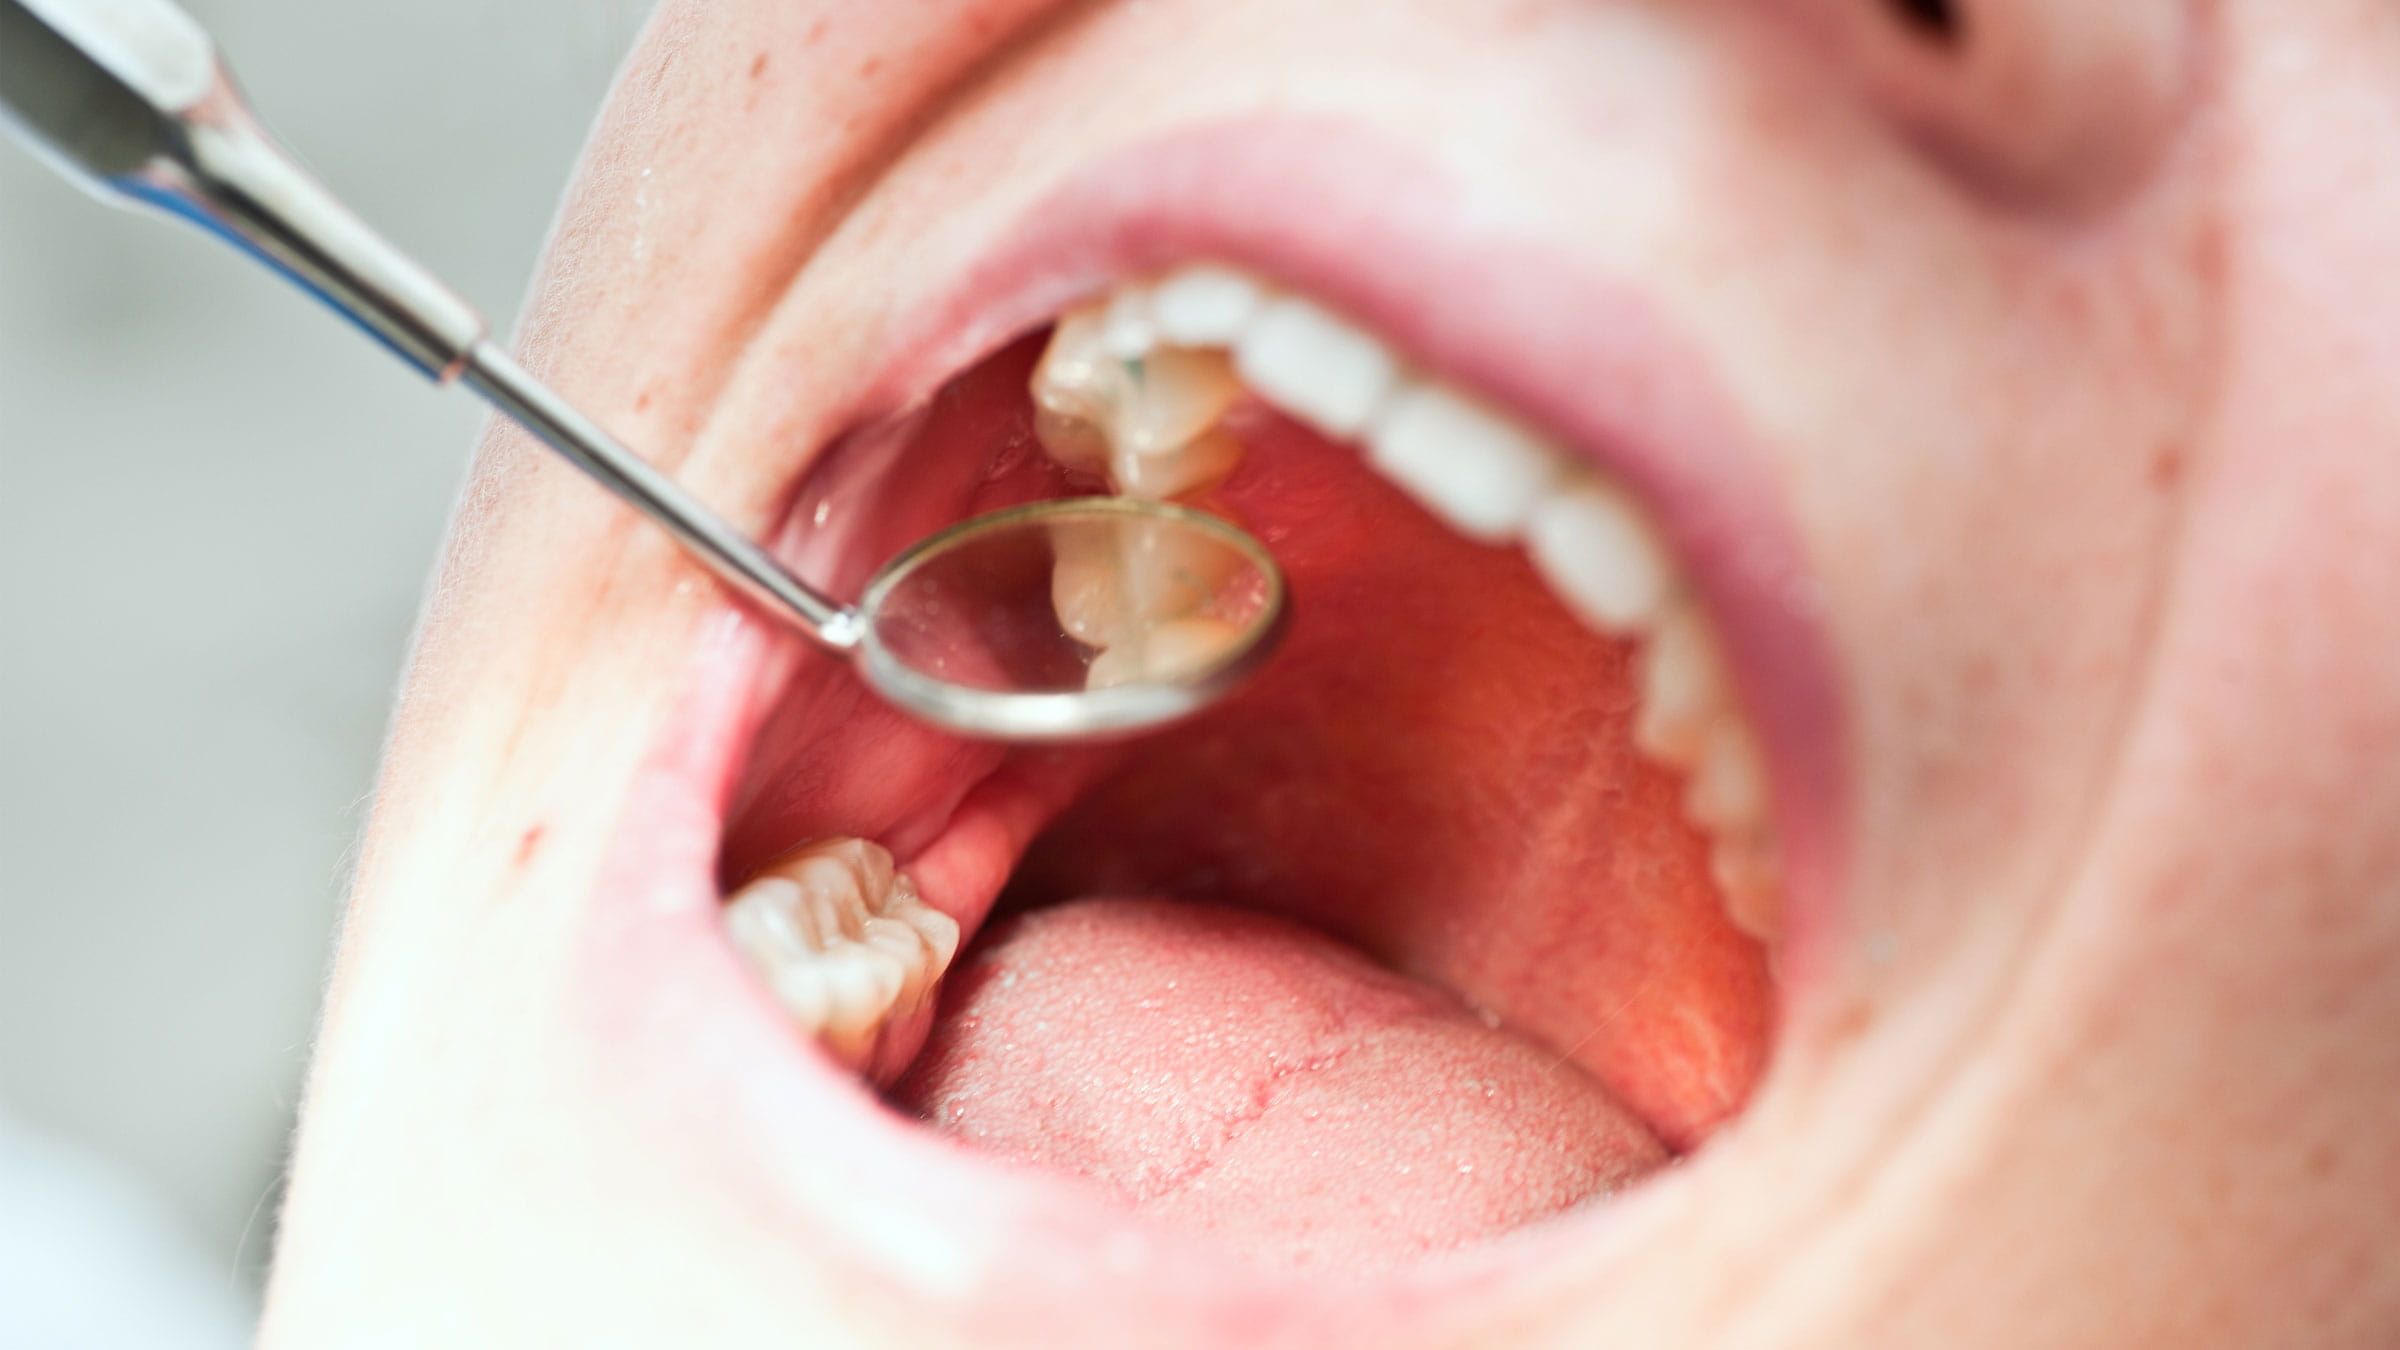 Dental exam of a patient's tongue